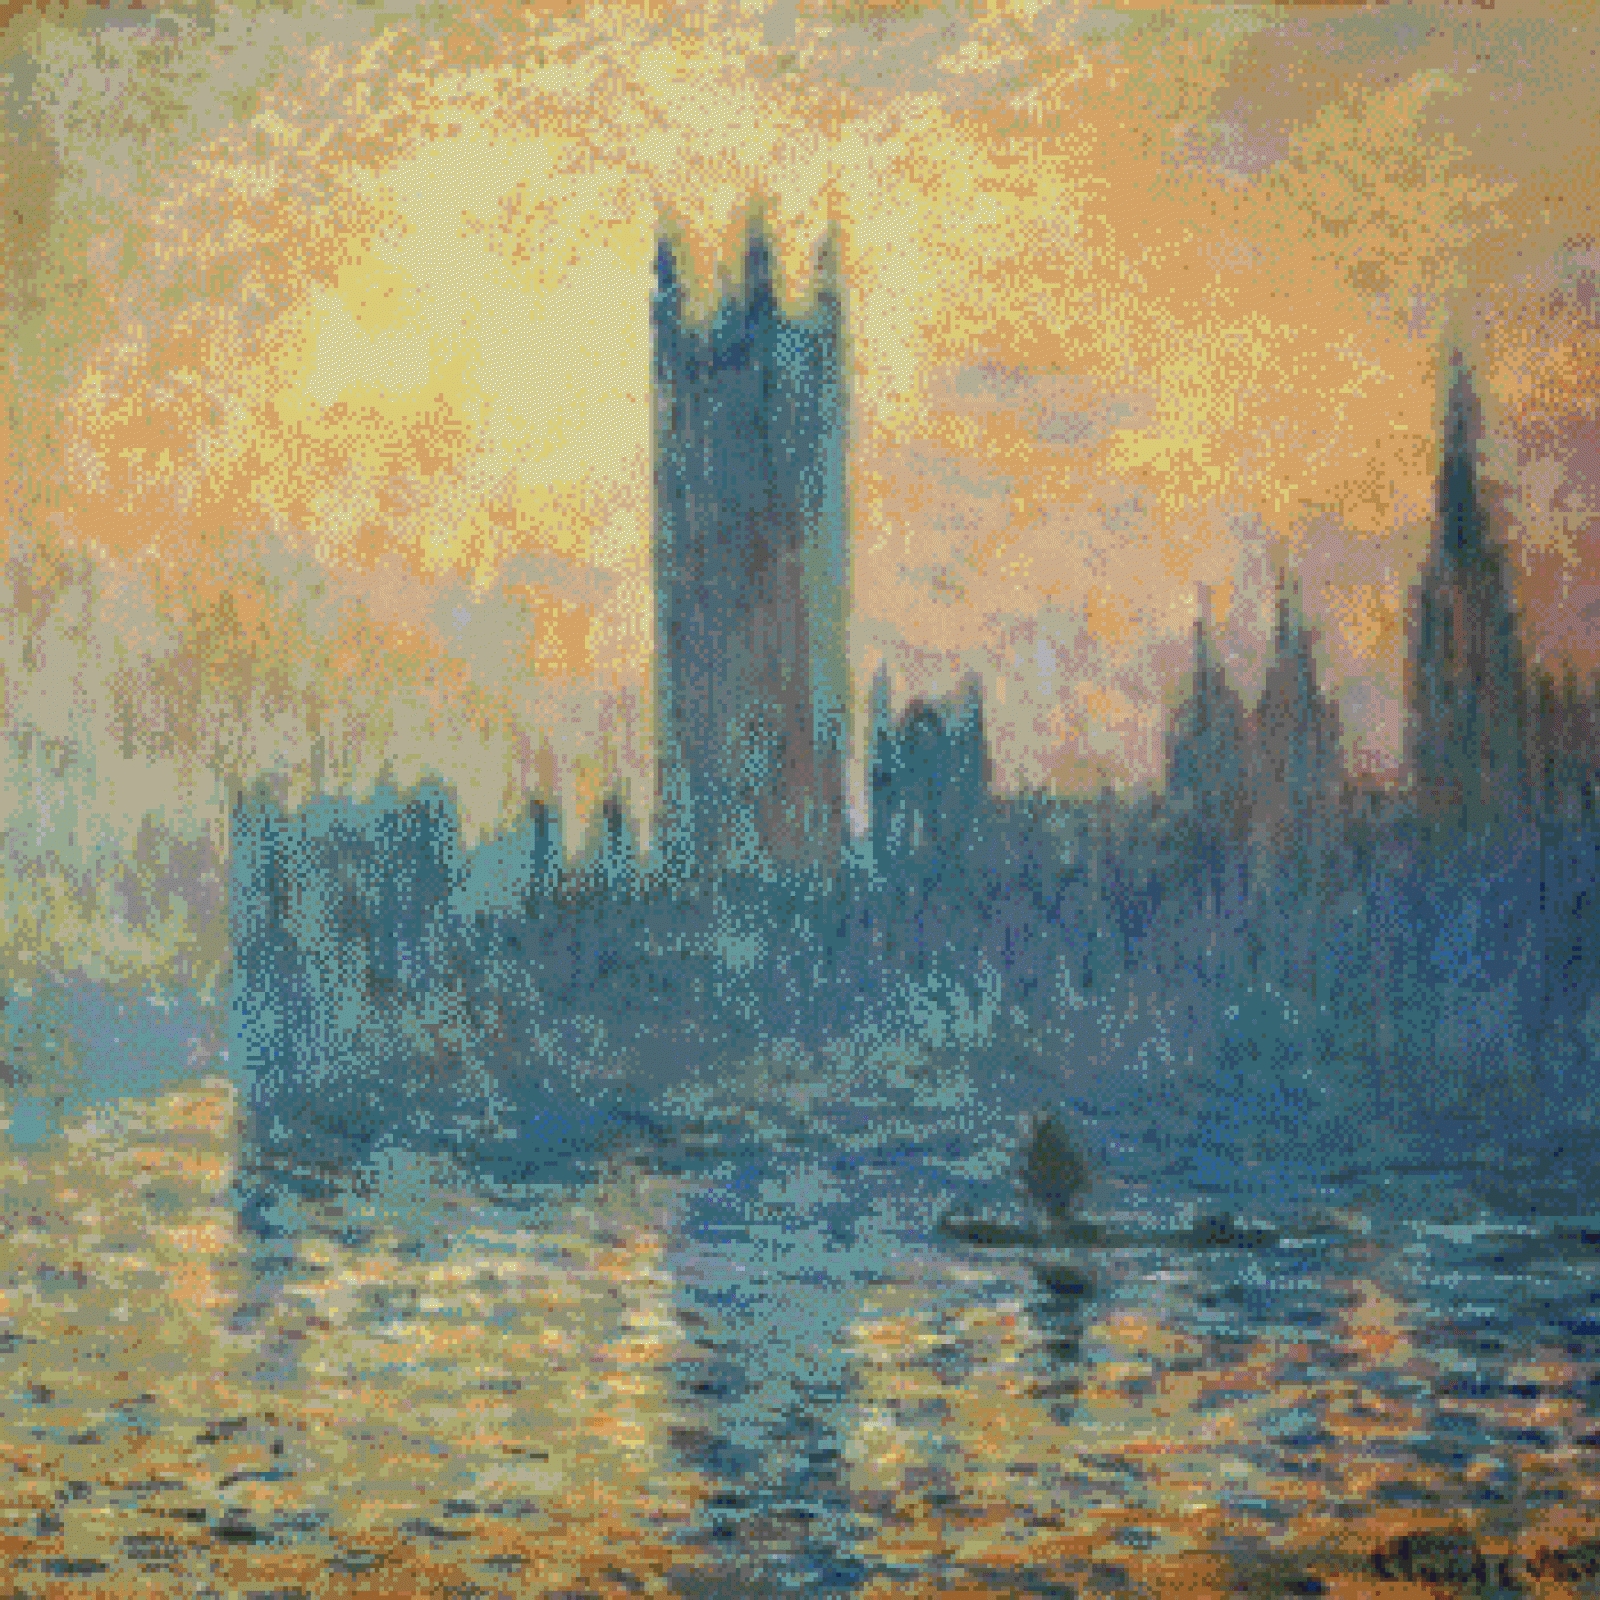 Claude+Monet-1840-1926 (453).jpg